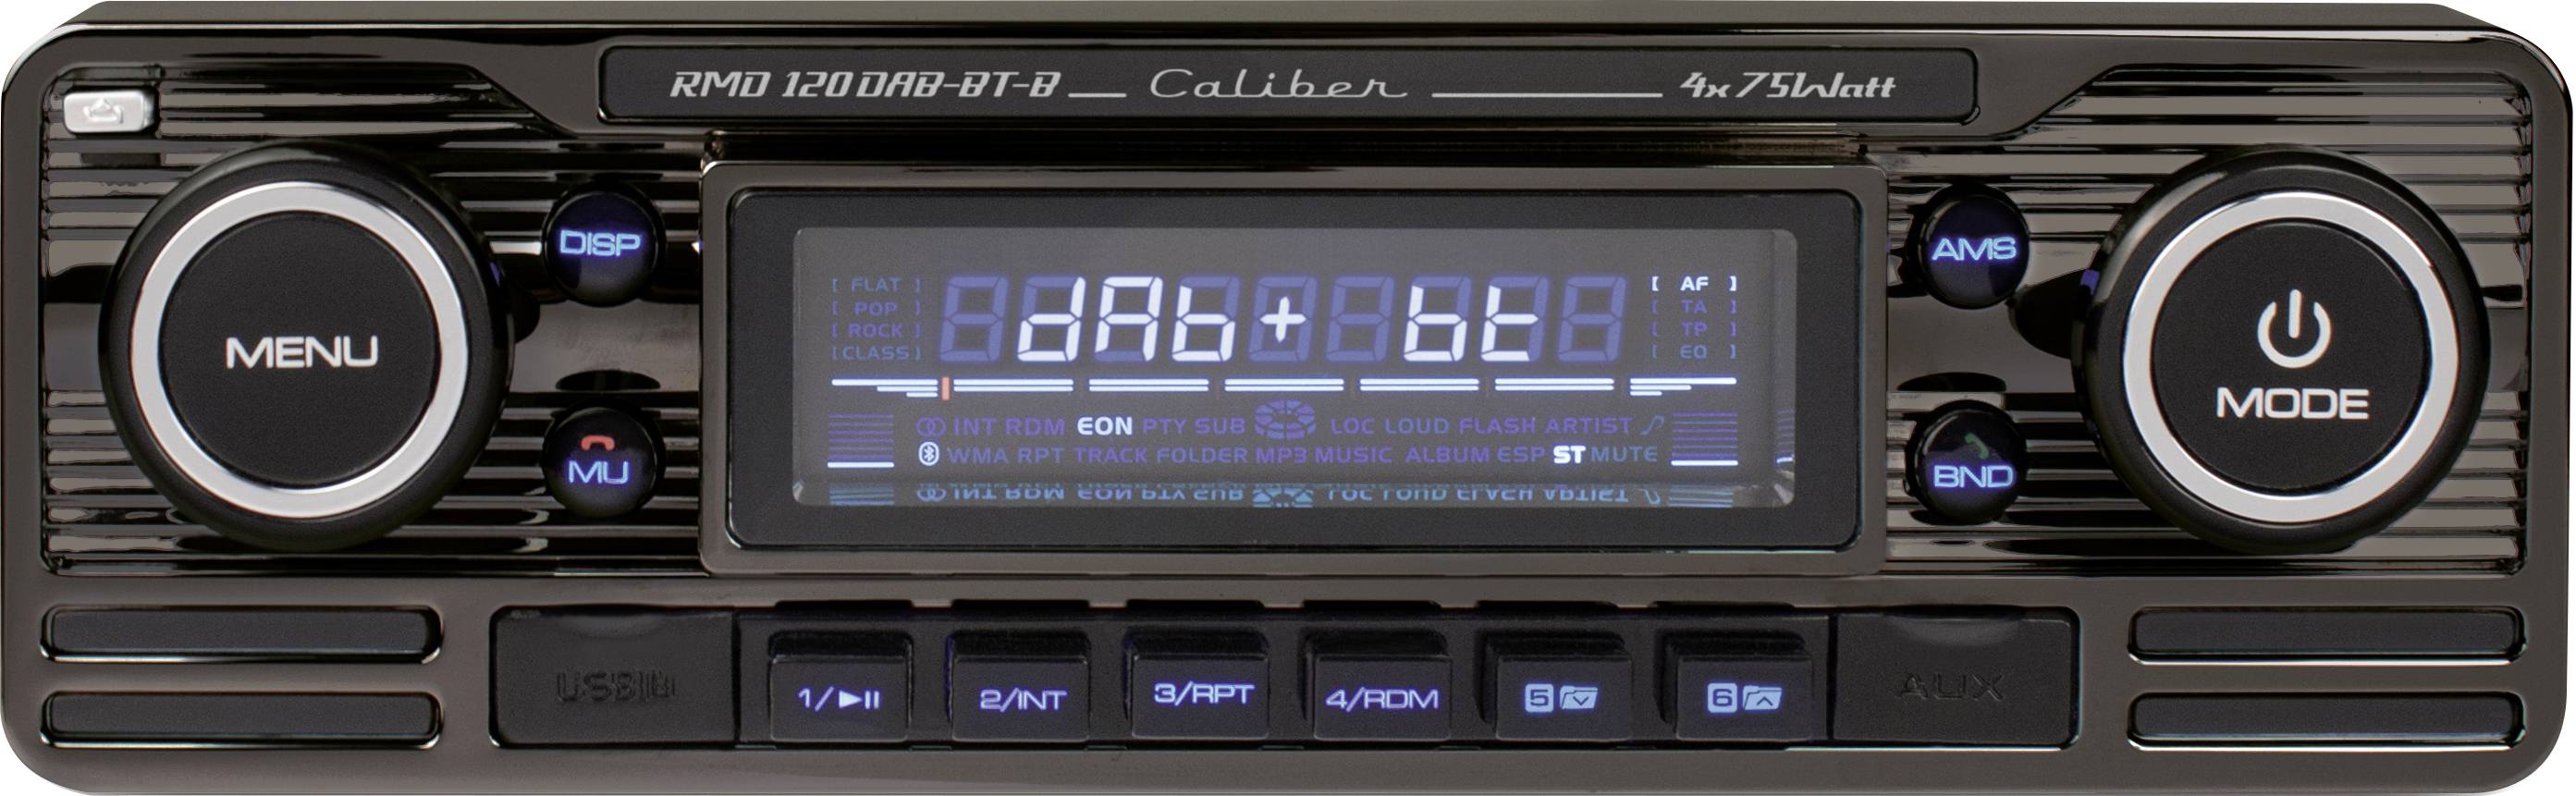 RMD120DAB-BT/B - Autoradio Vintage Bluetooth Usb Aux Dab CALIBER  RMD120DAB-BT/B